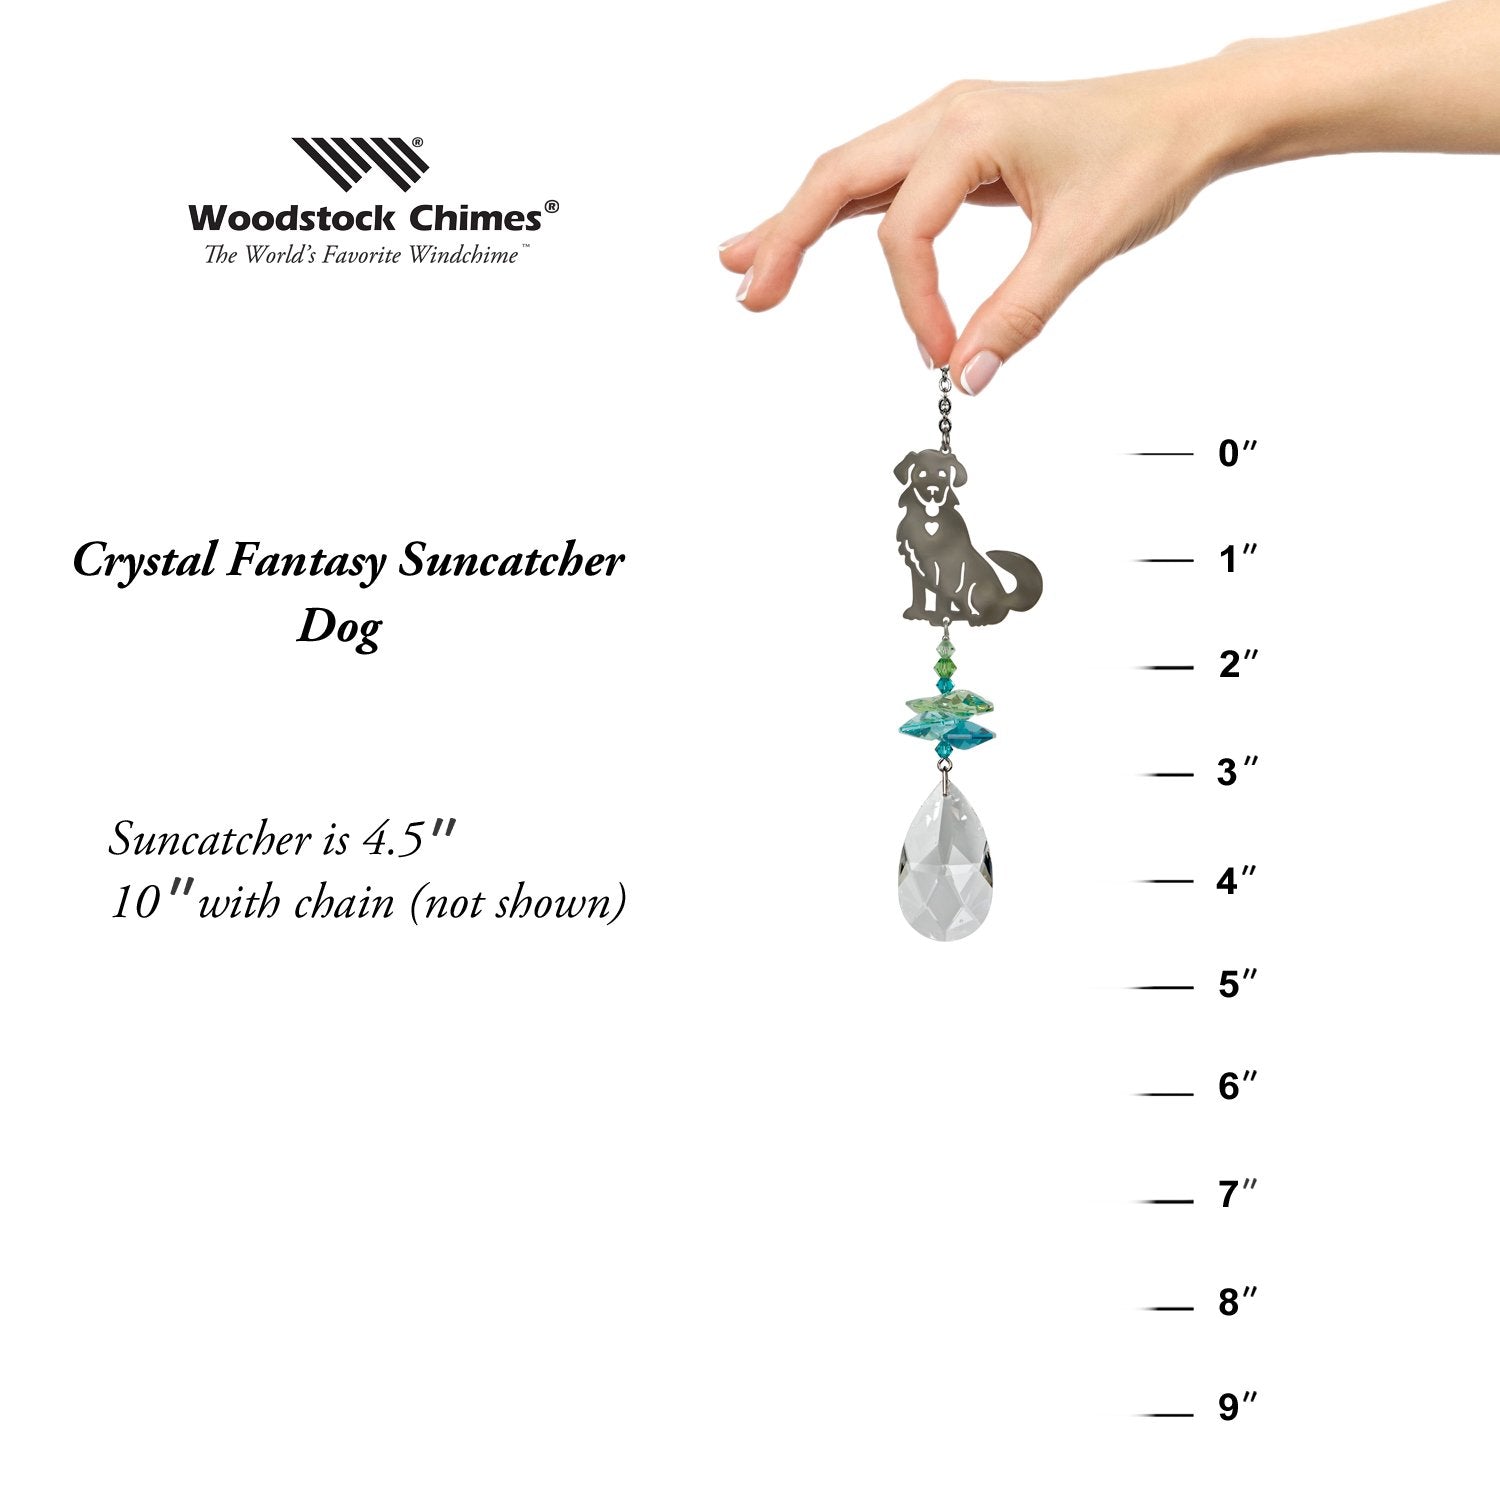 Crystal Fantasy Suncatcher - Dog proportion image